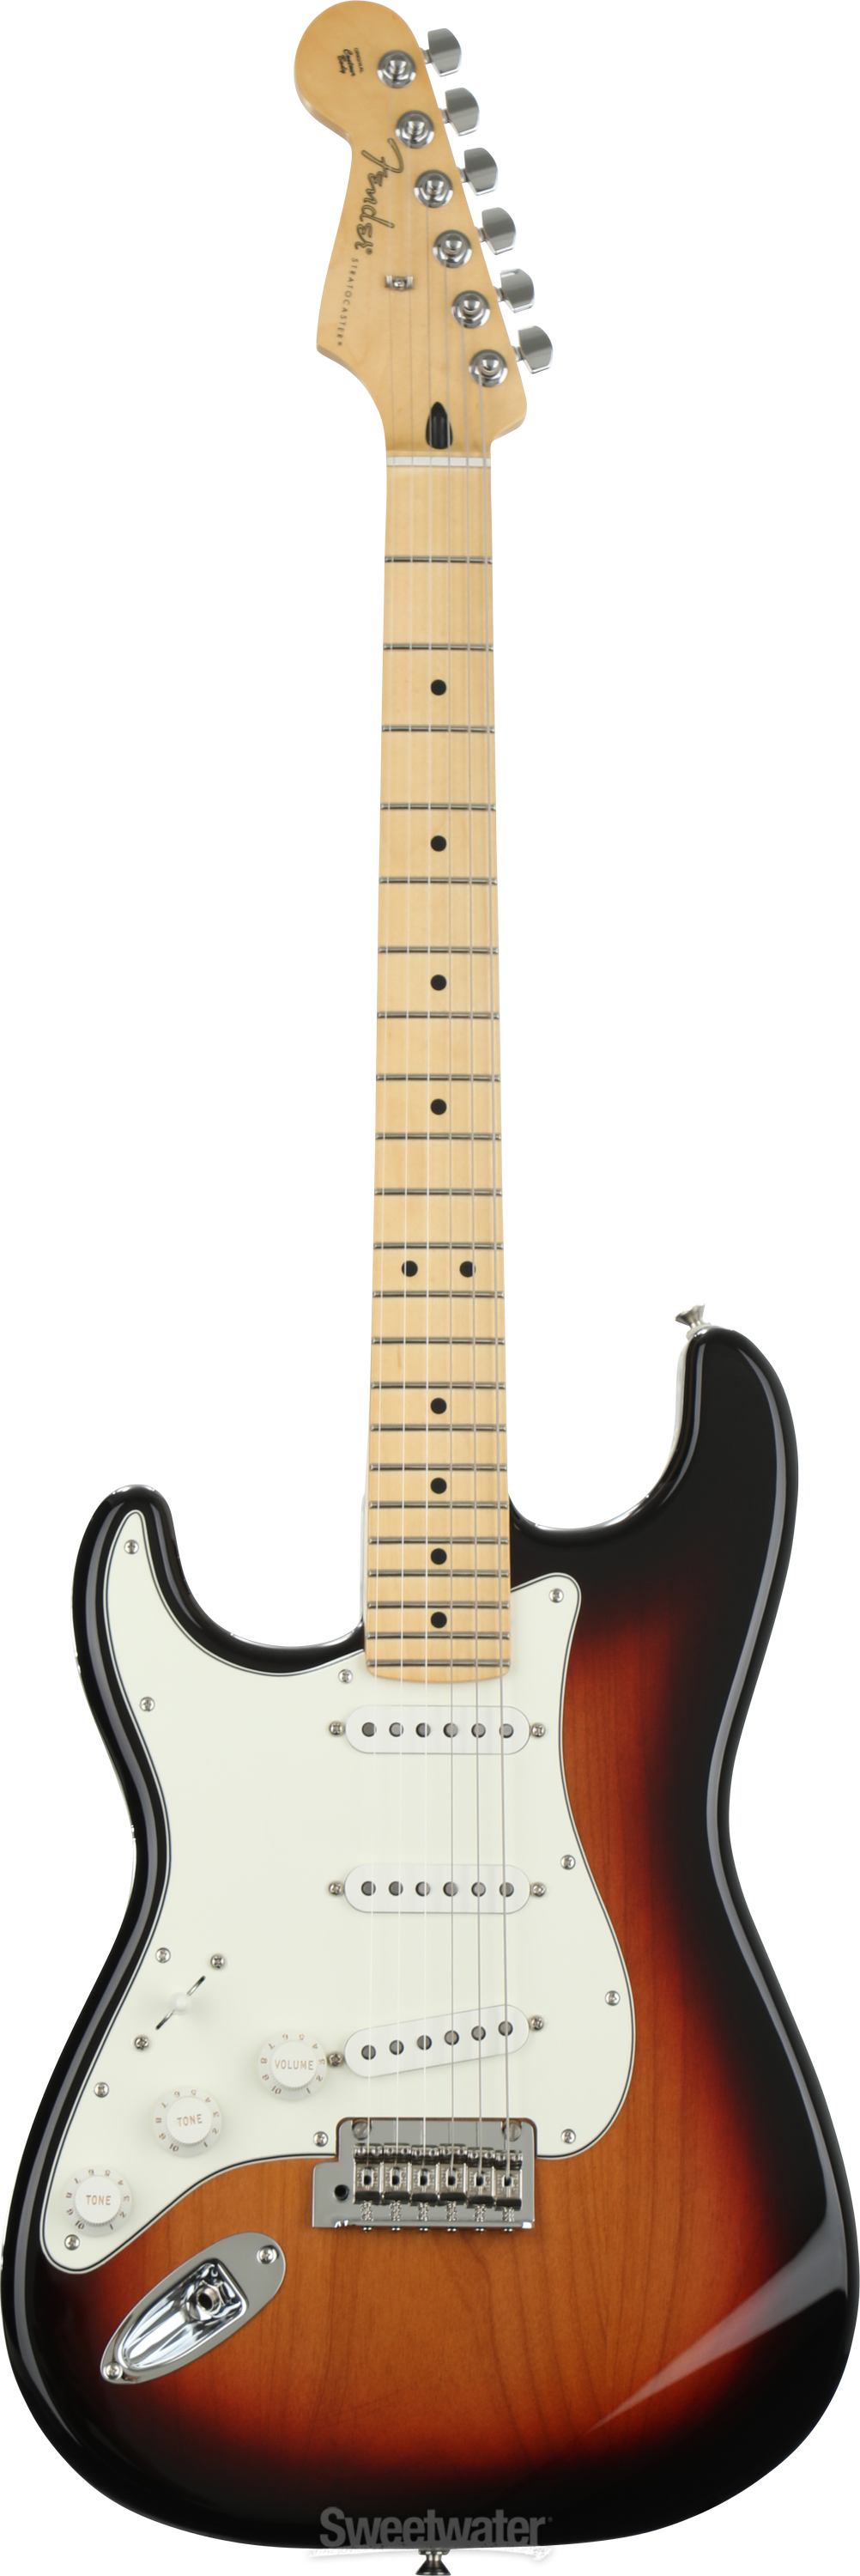 Fender Player Stratocaster Left-handed - 3-Tone Sunburst with 